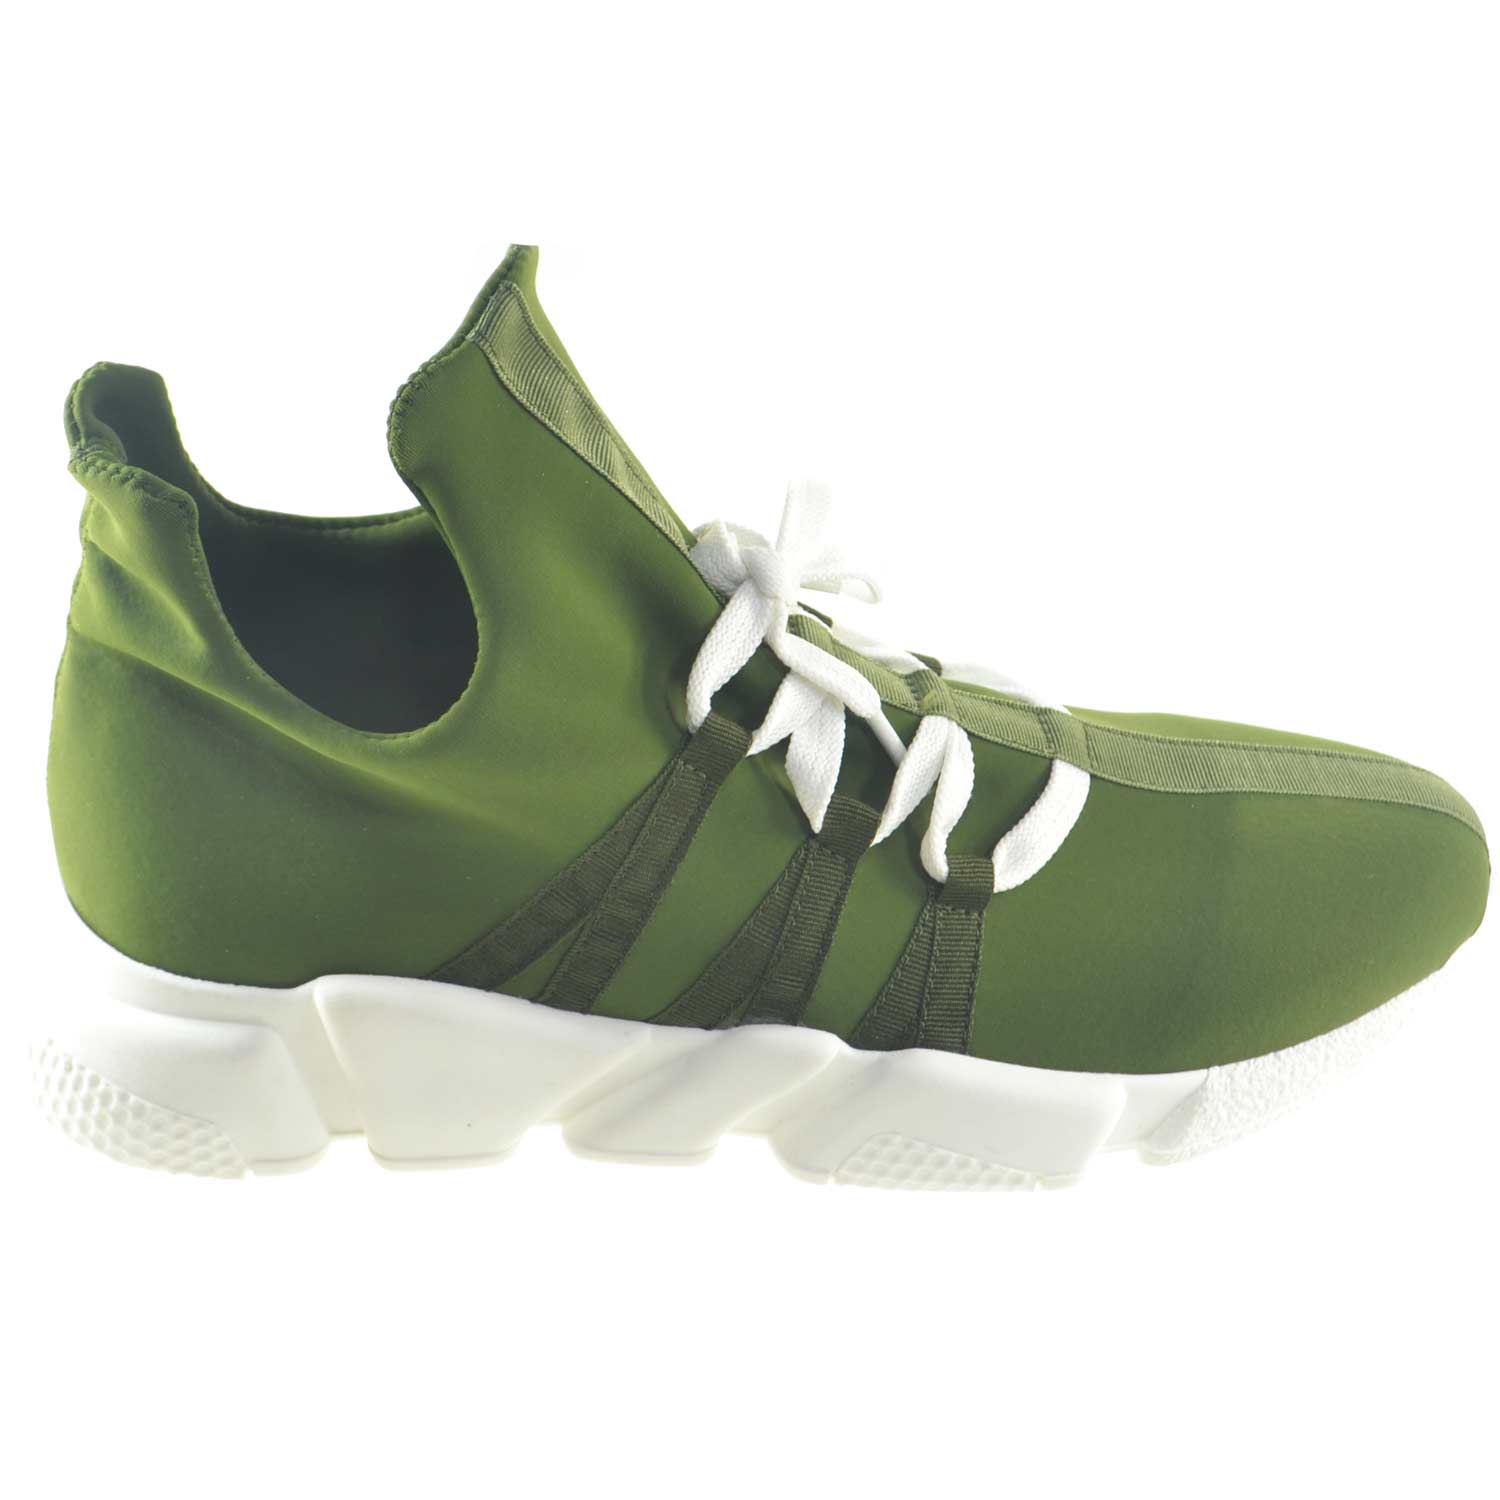 scarpe uomo sneakers bassa in tessuto calzino lycra verde made in italy moda giovanile primavera estate.